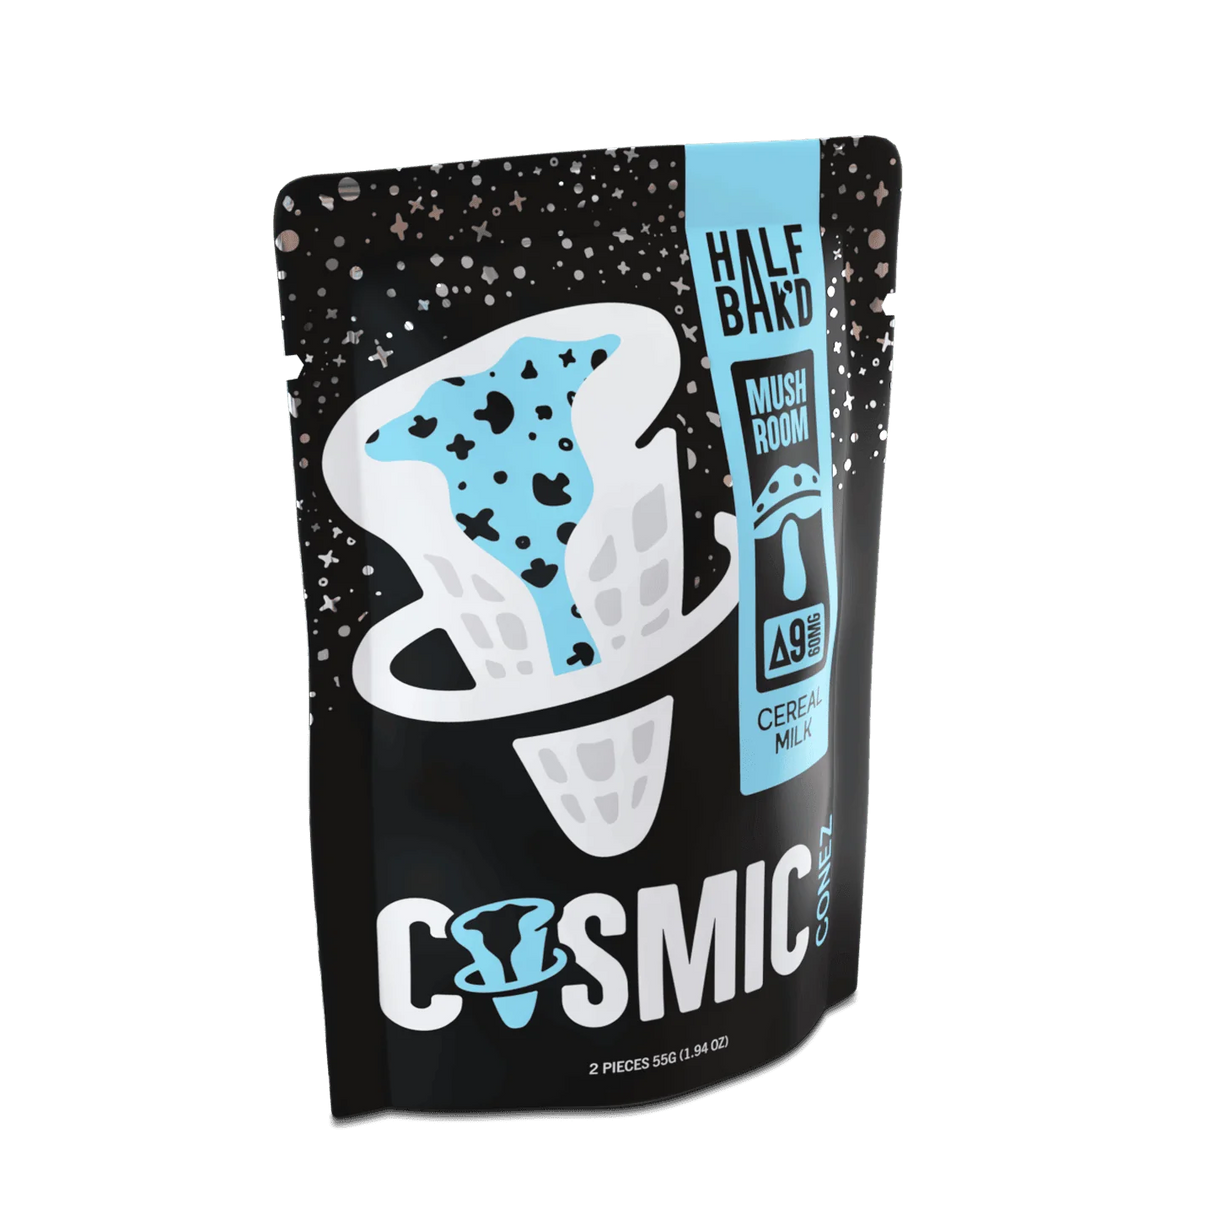 Half Bak'd Cosmic Conez Mushroom 60mg 2ct - Cereal Milk